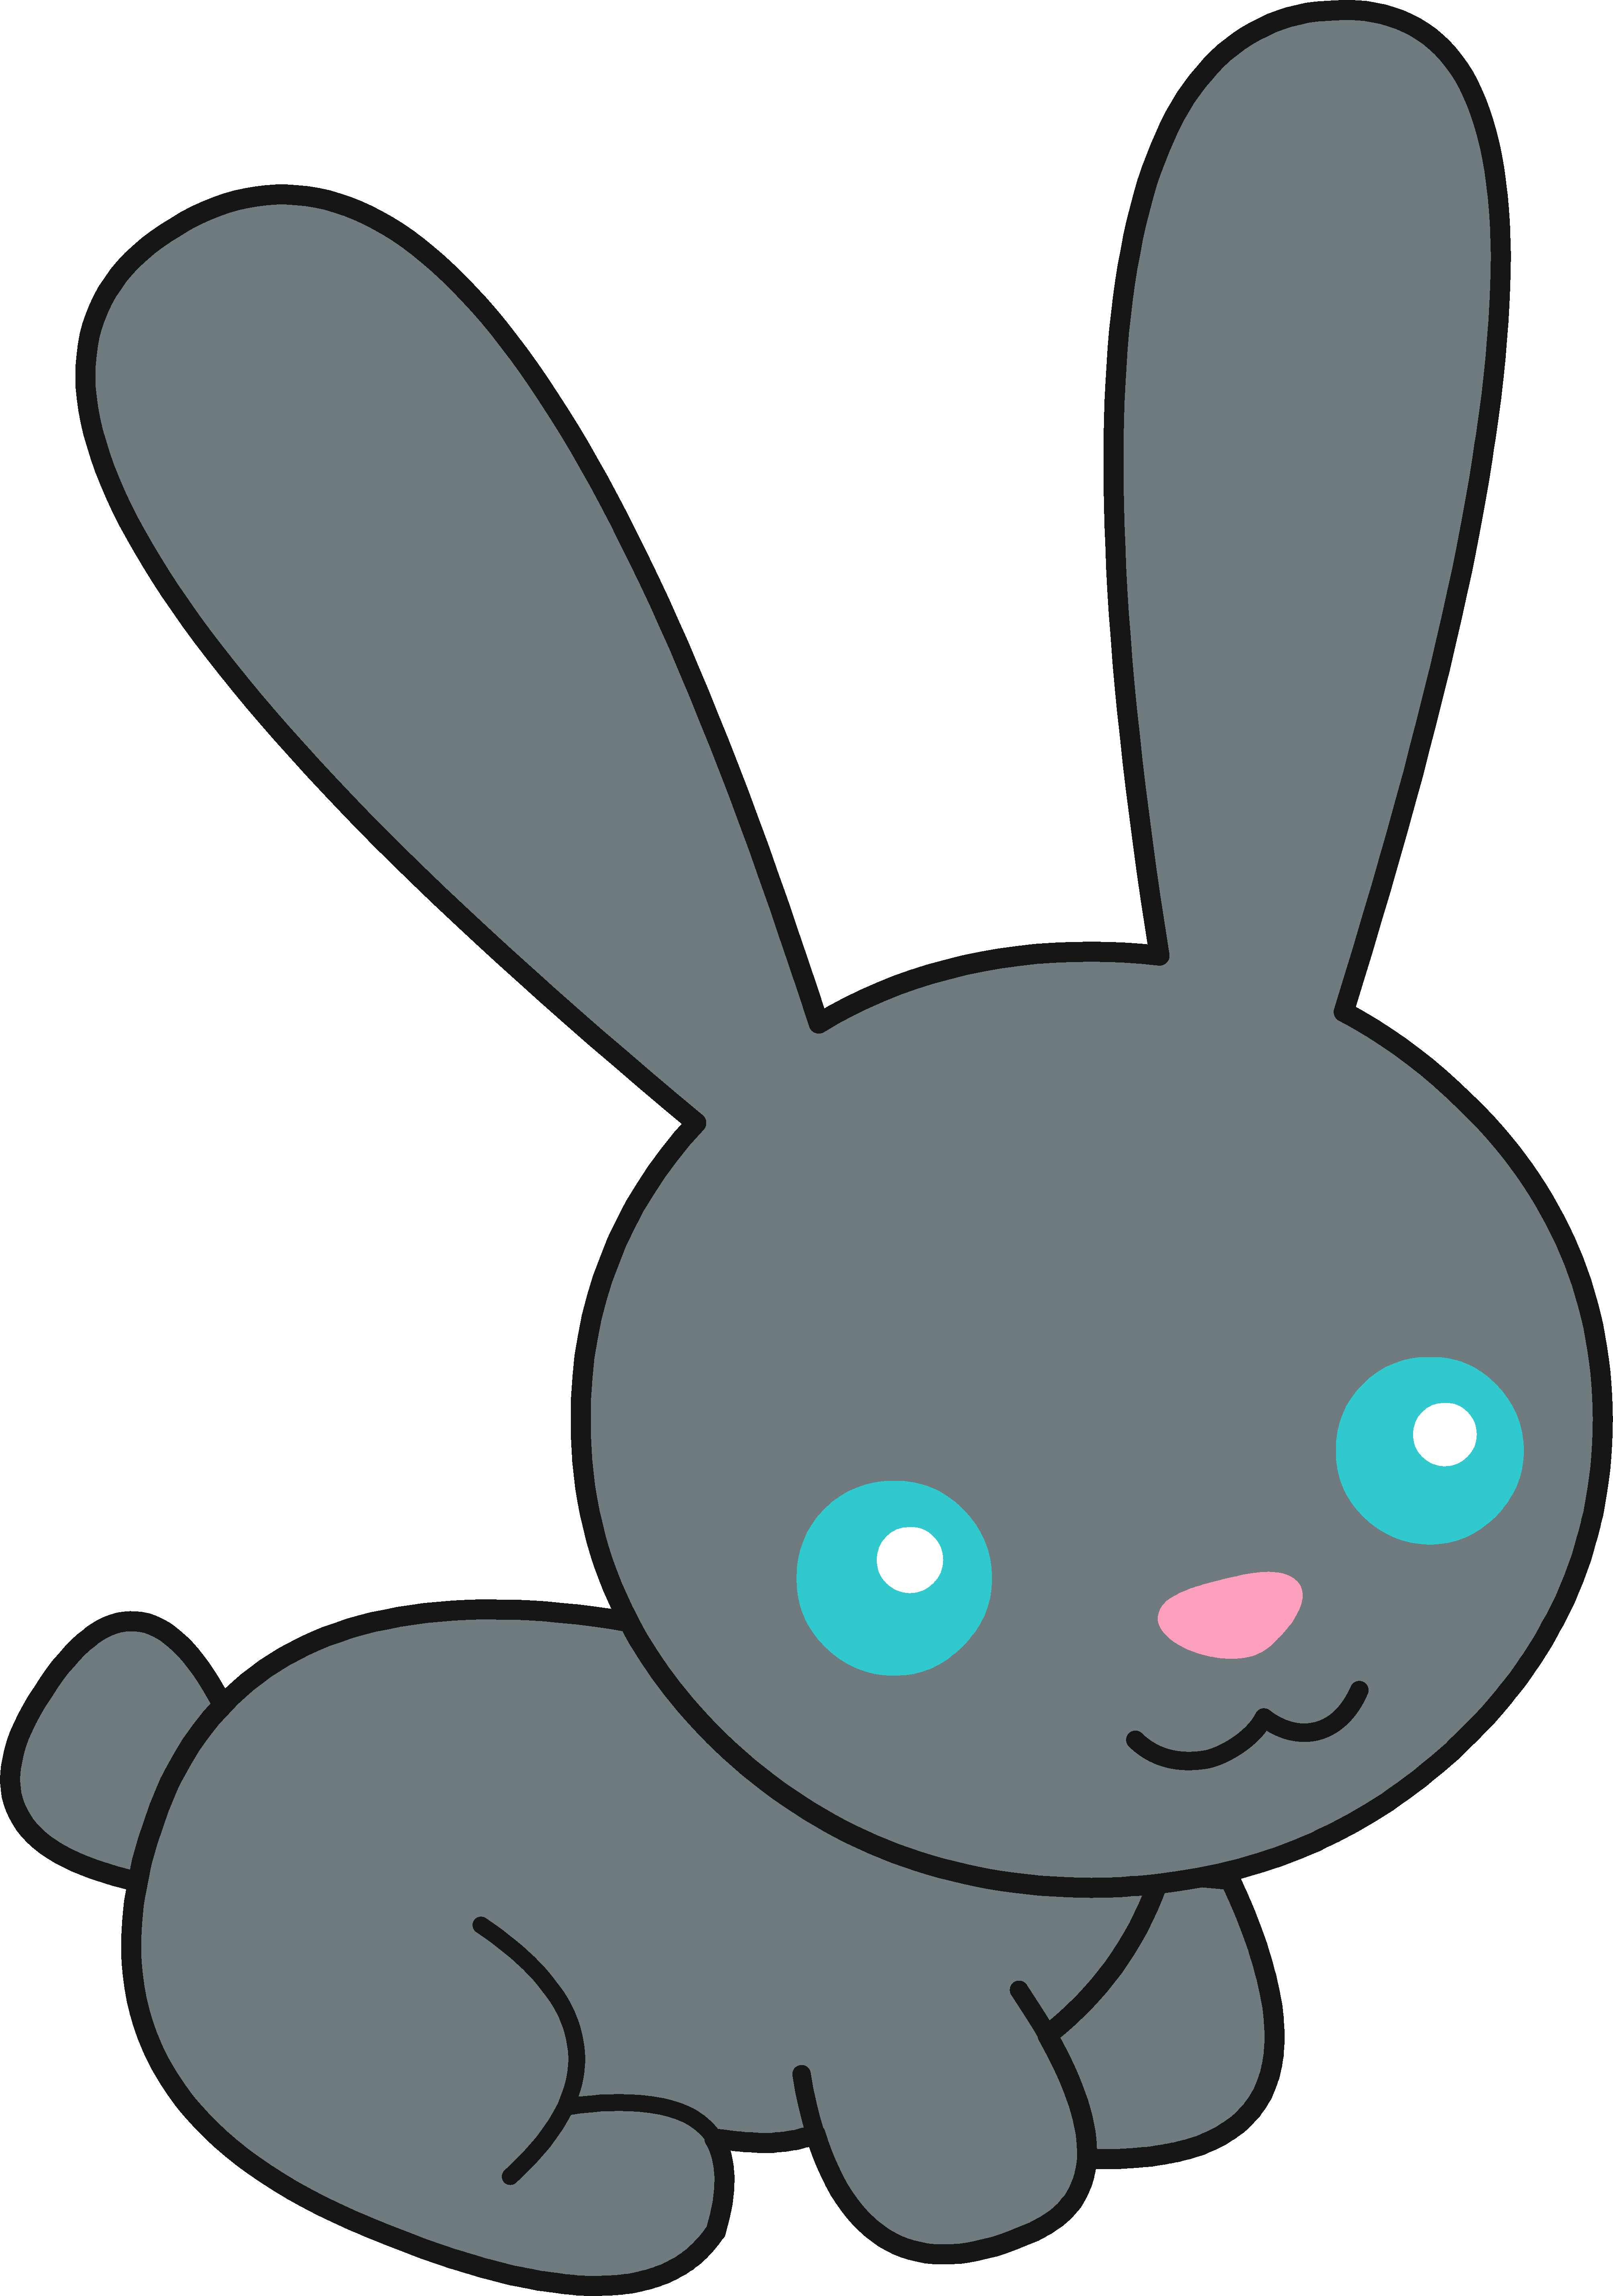 Rabbit Cartoon Pictures - ClipArt Best